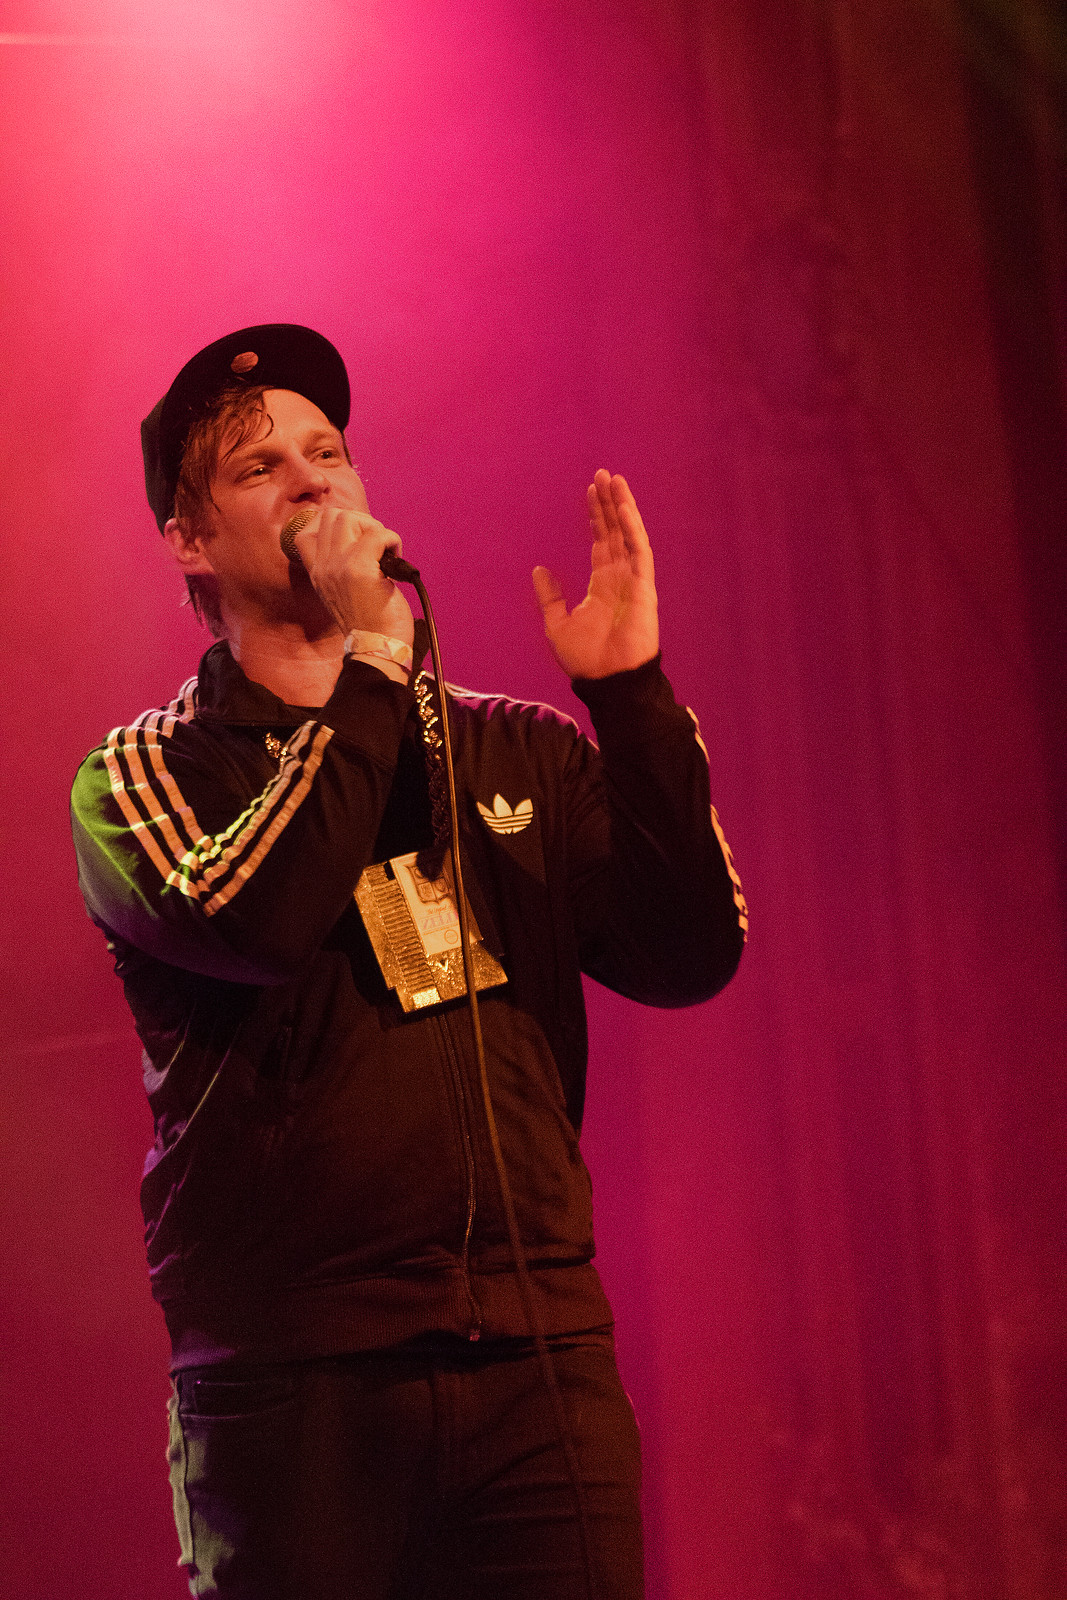 MC Lars at Denver's Bluebird Theater, 2016